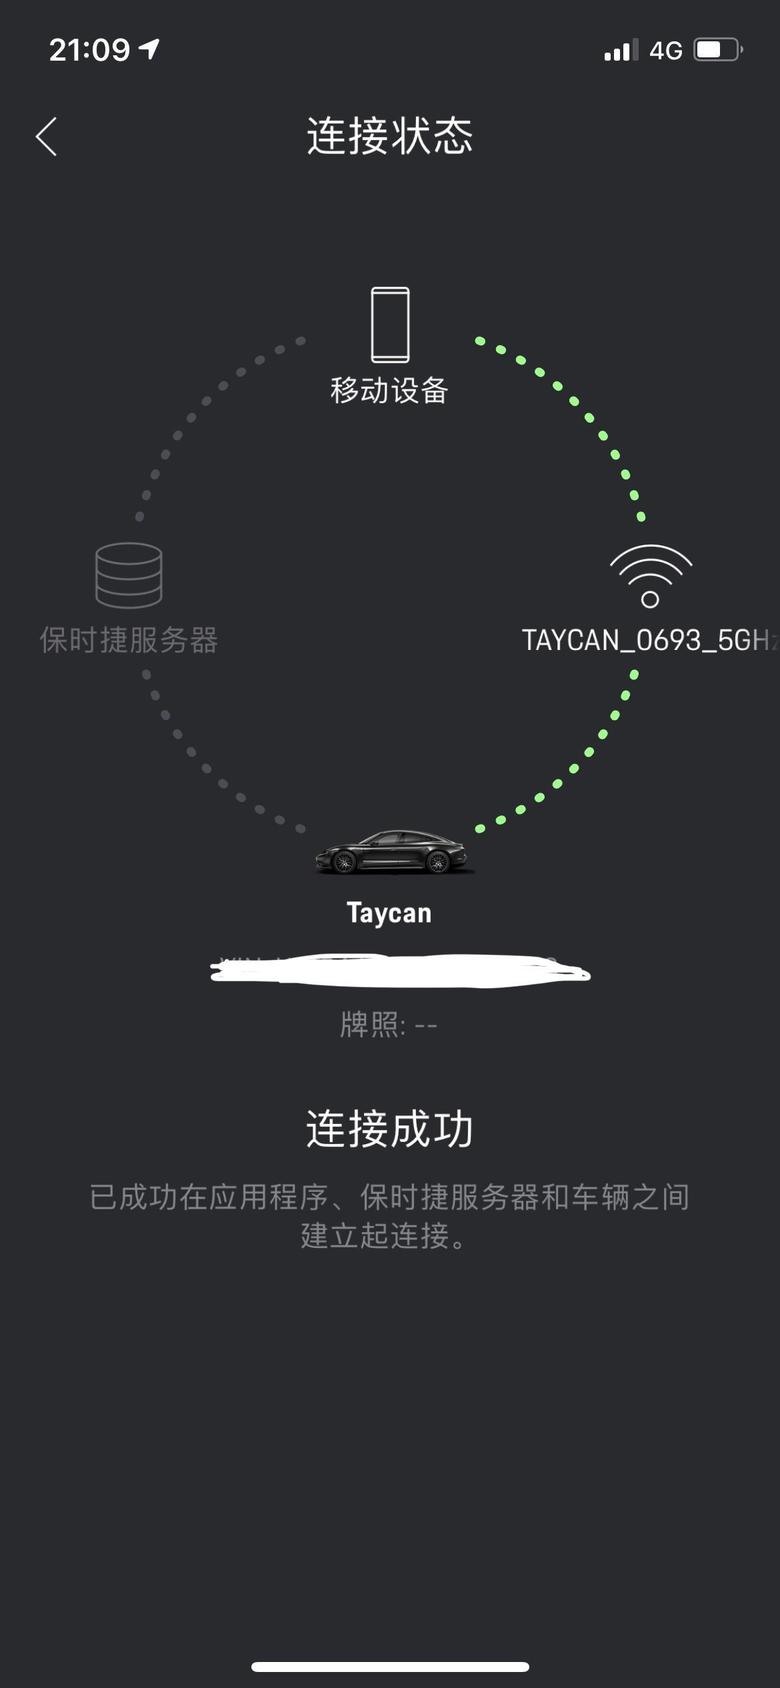 taycan是不是要连接到保时捷服务器才会显示车辆数据我在手机的智慧互联车辆情况啥都看不到